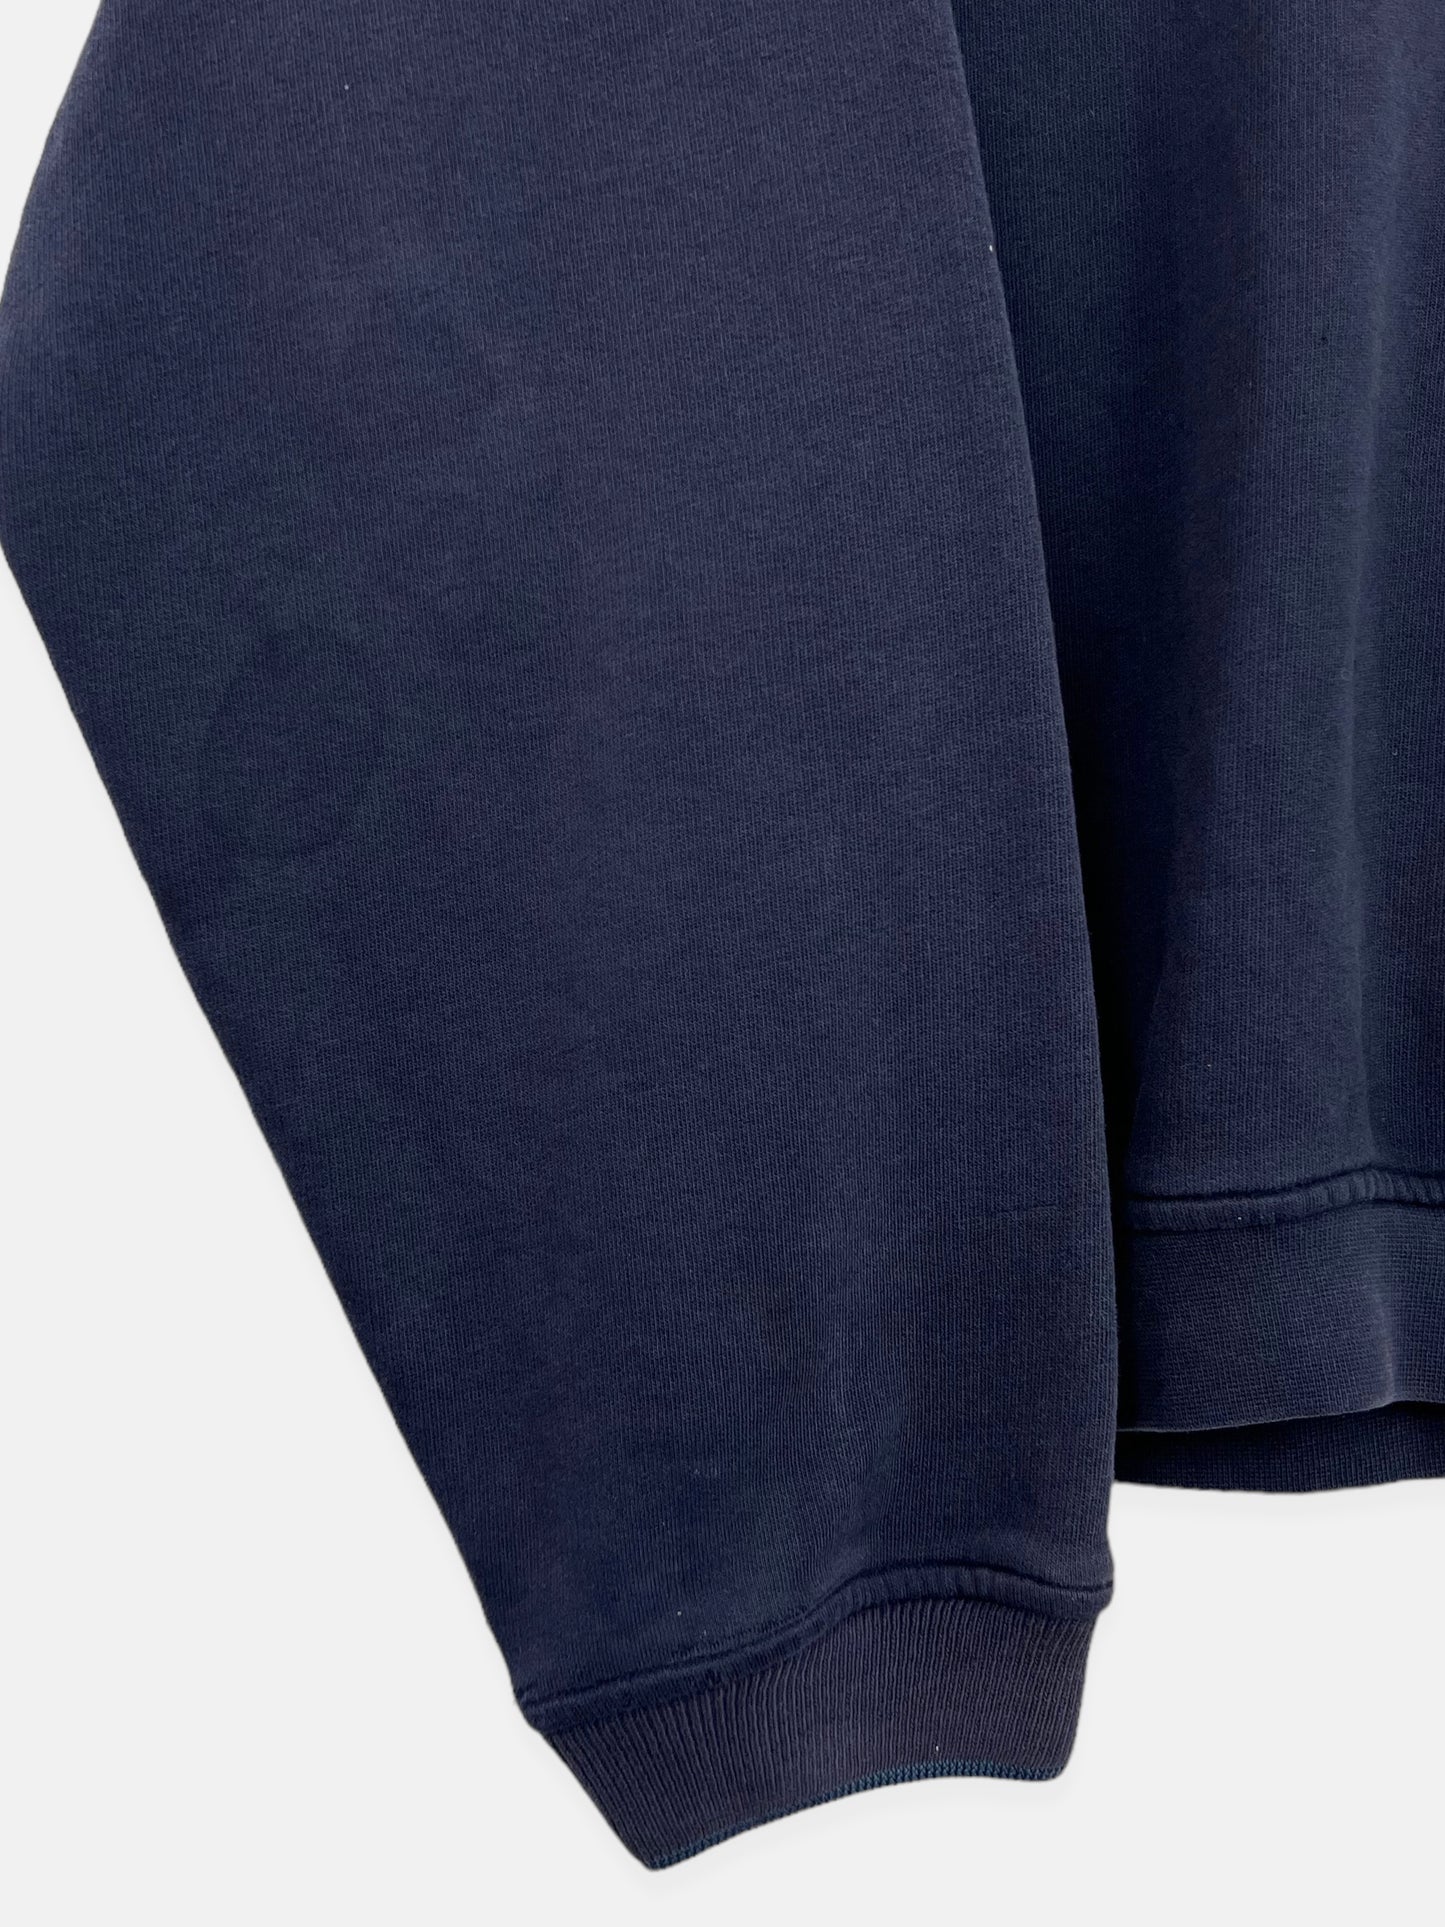 90's Nike Embroidered Vintage Sweatshirt Size L